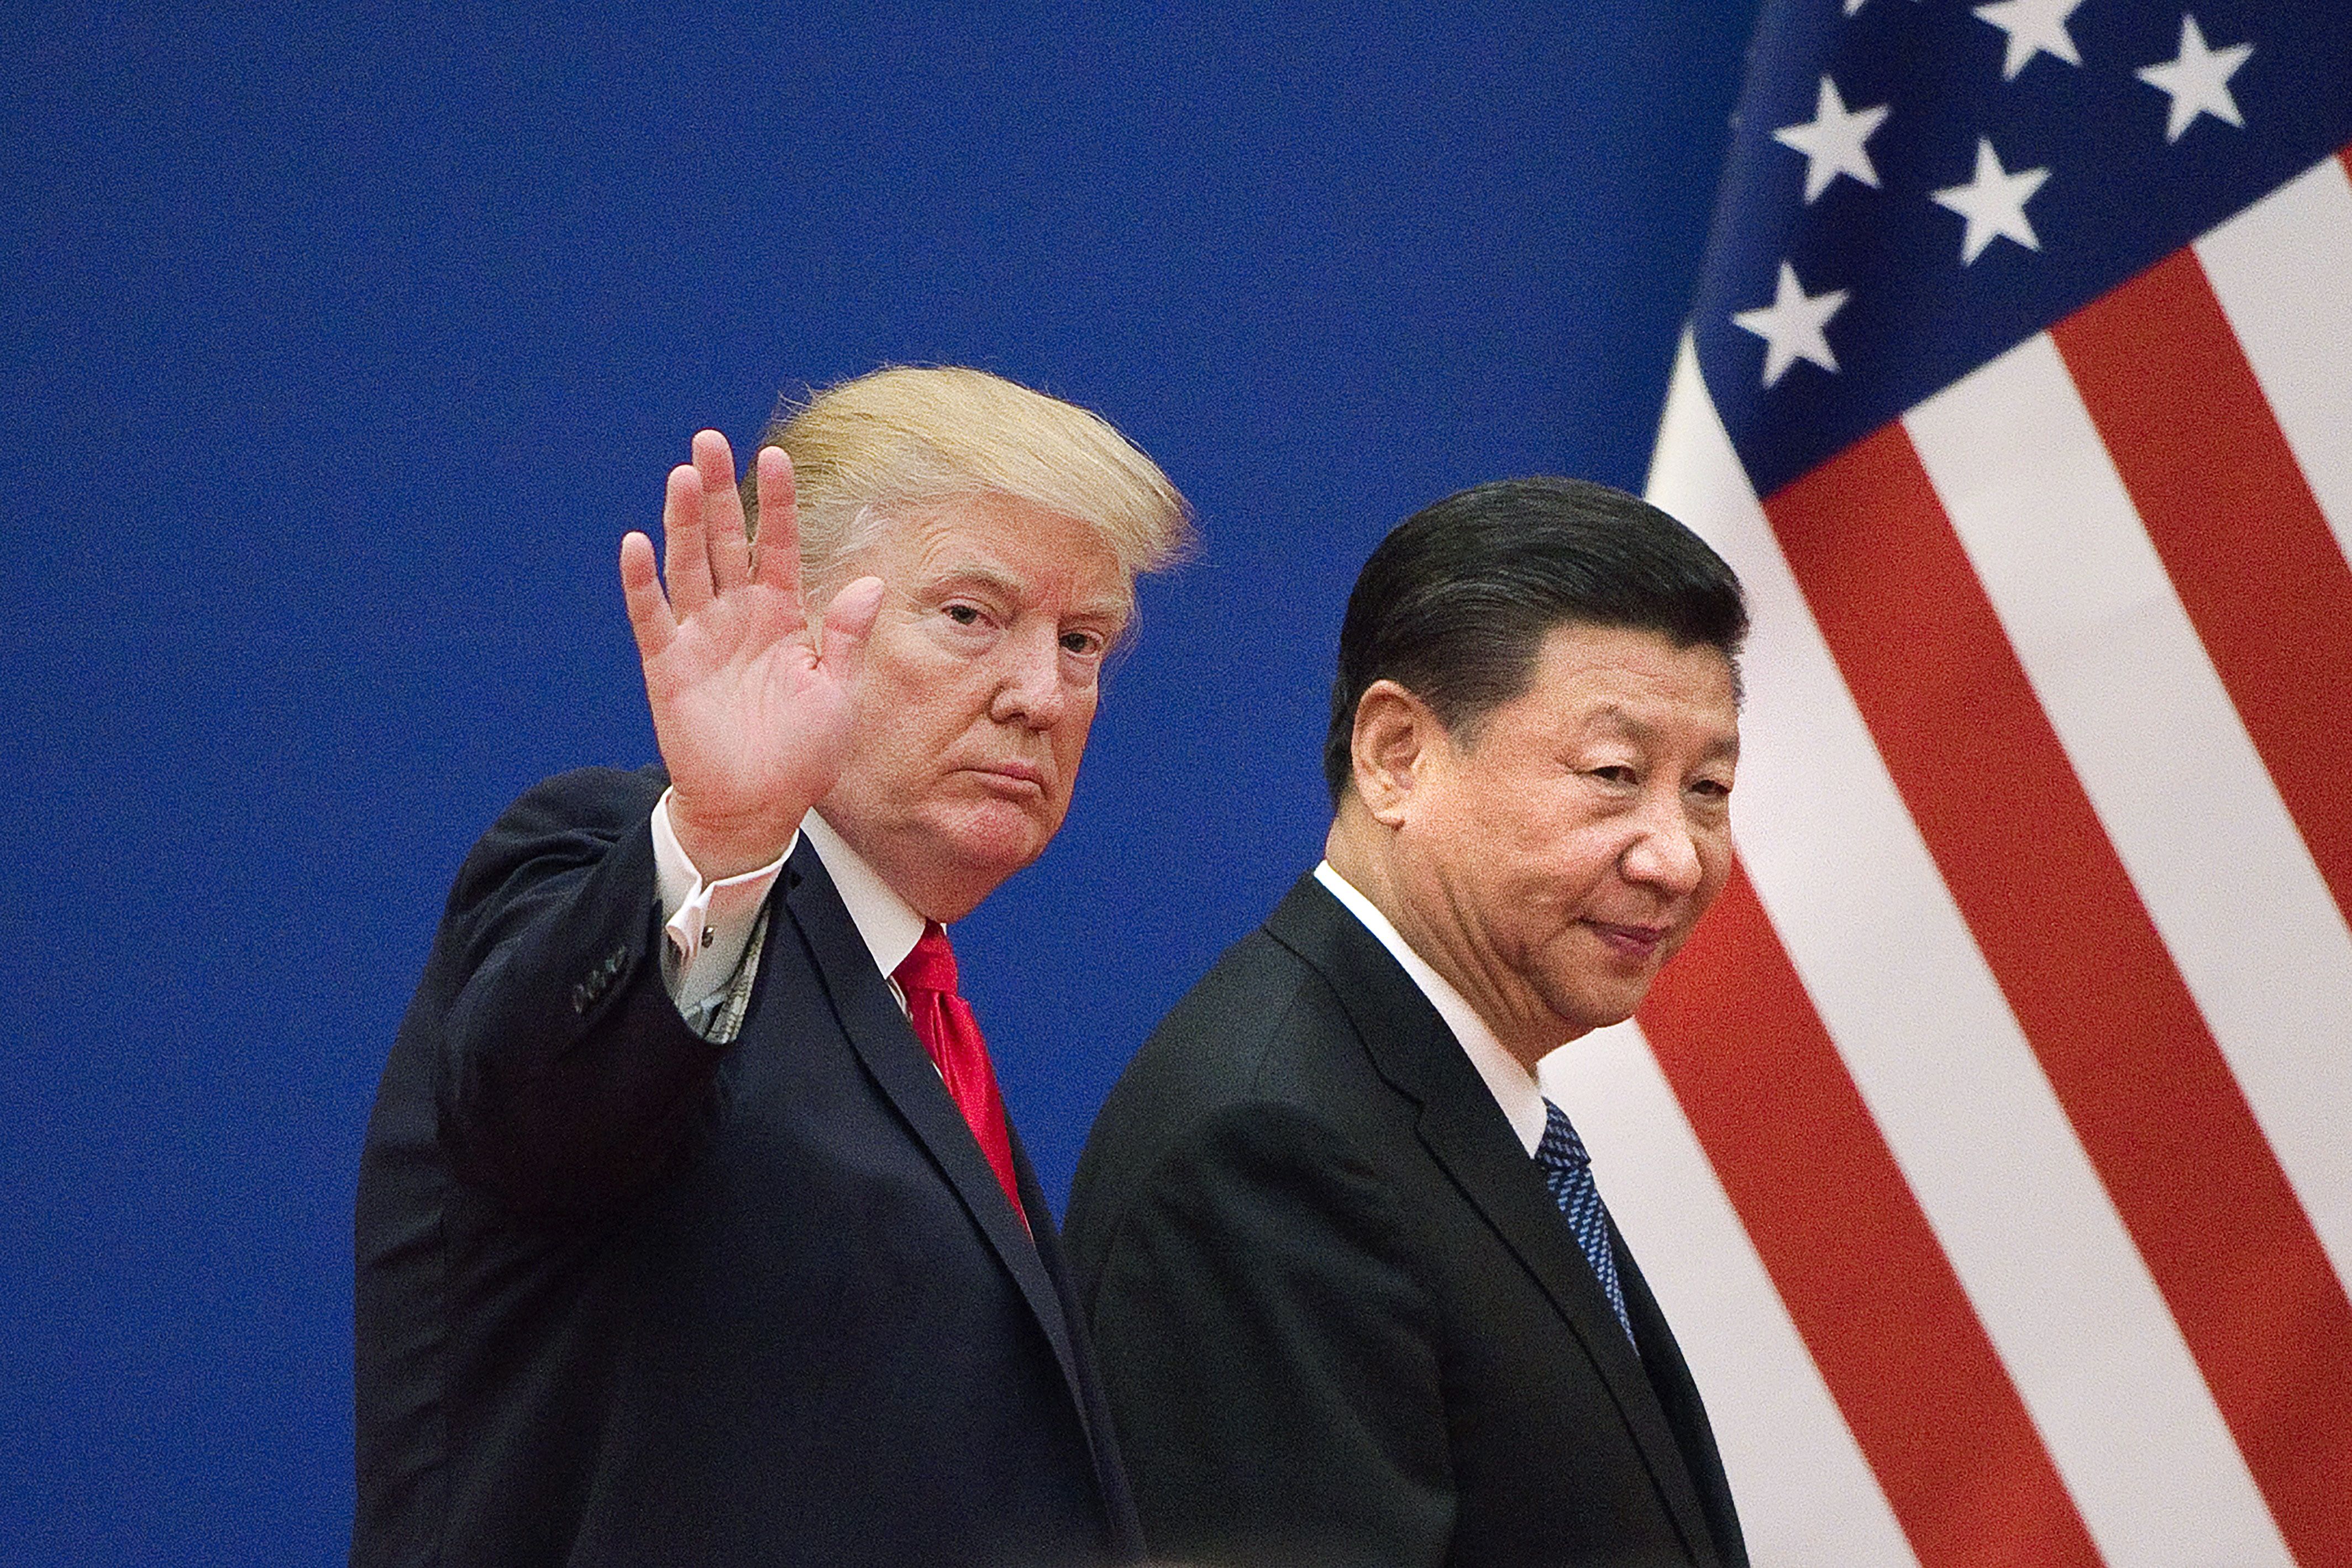 President Trump and Xi Jinping.